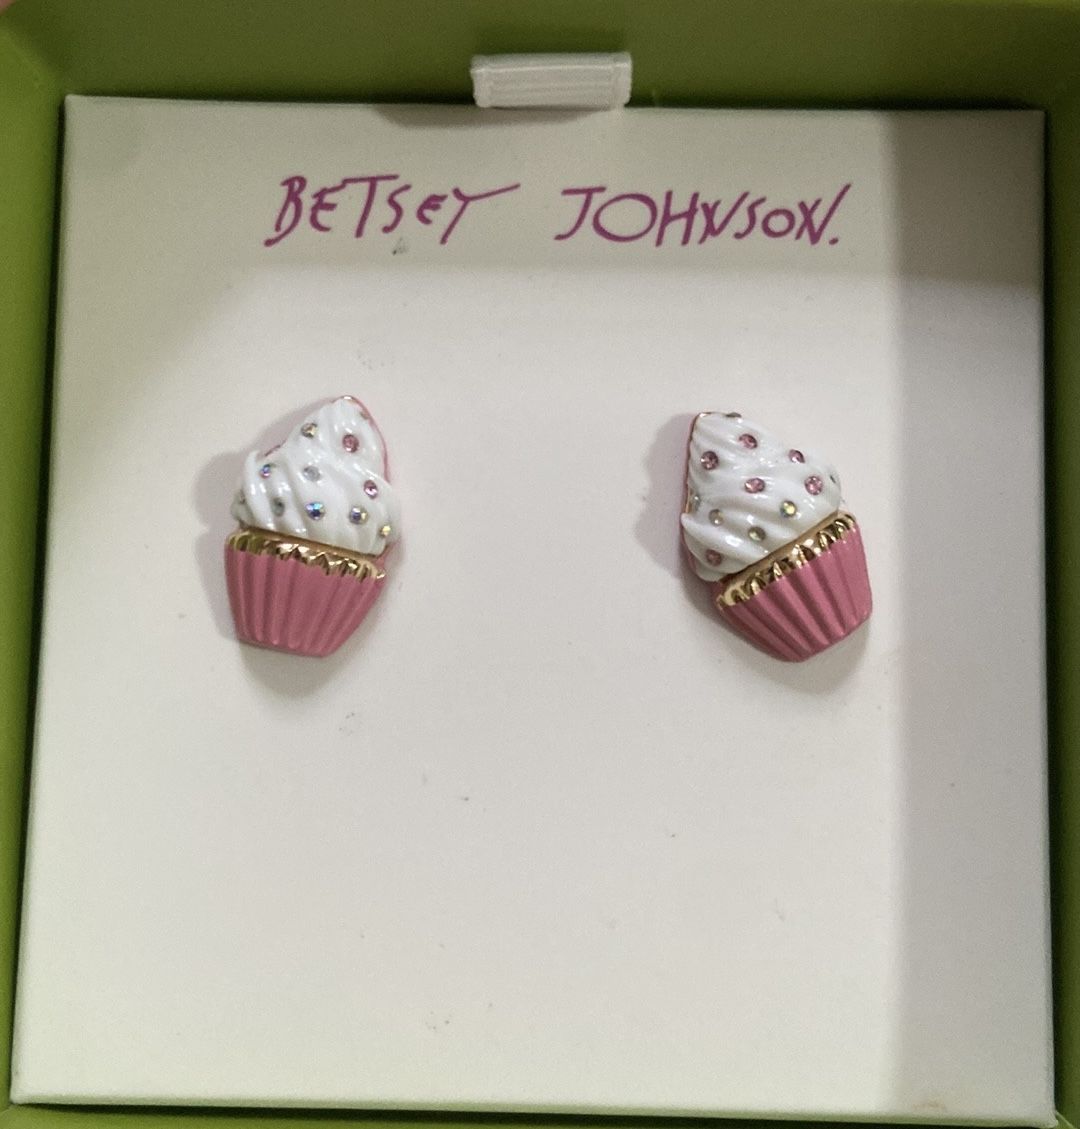 Betsey Johnson cupcake earrings